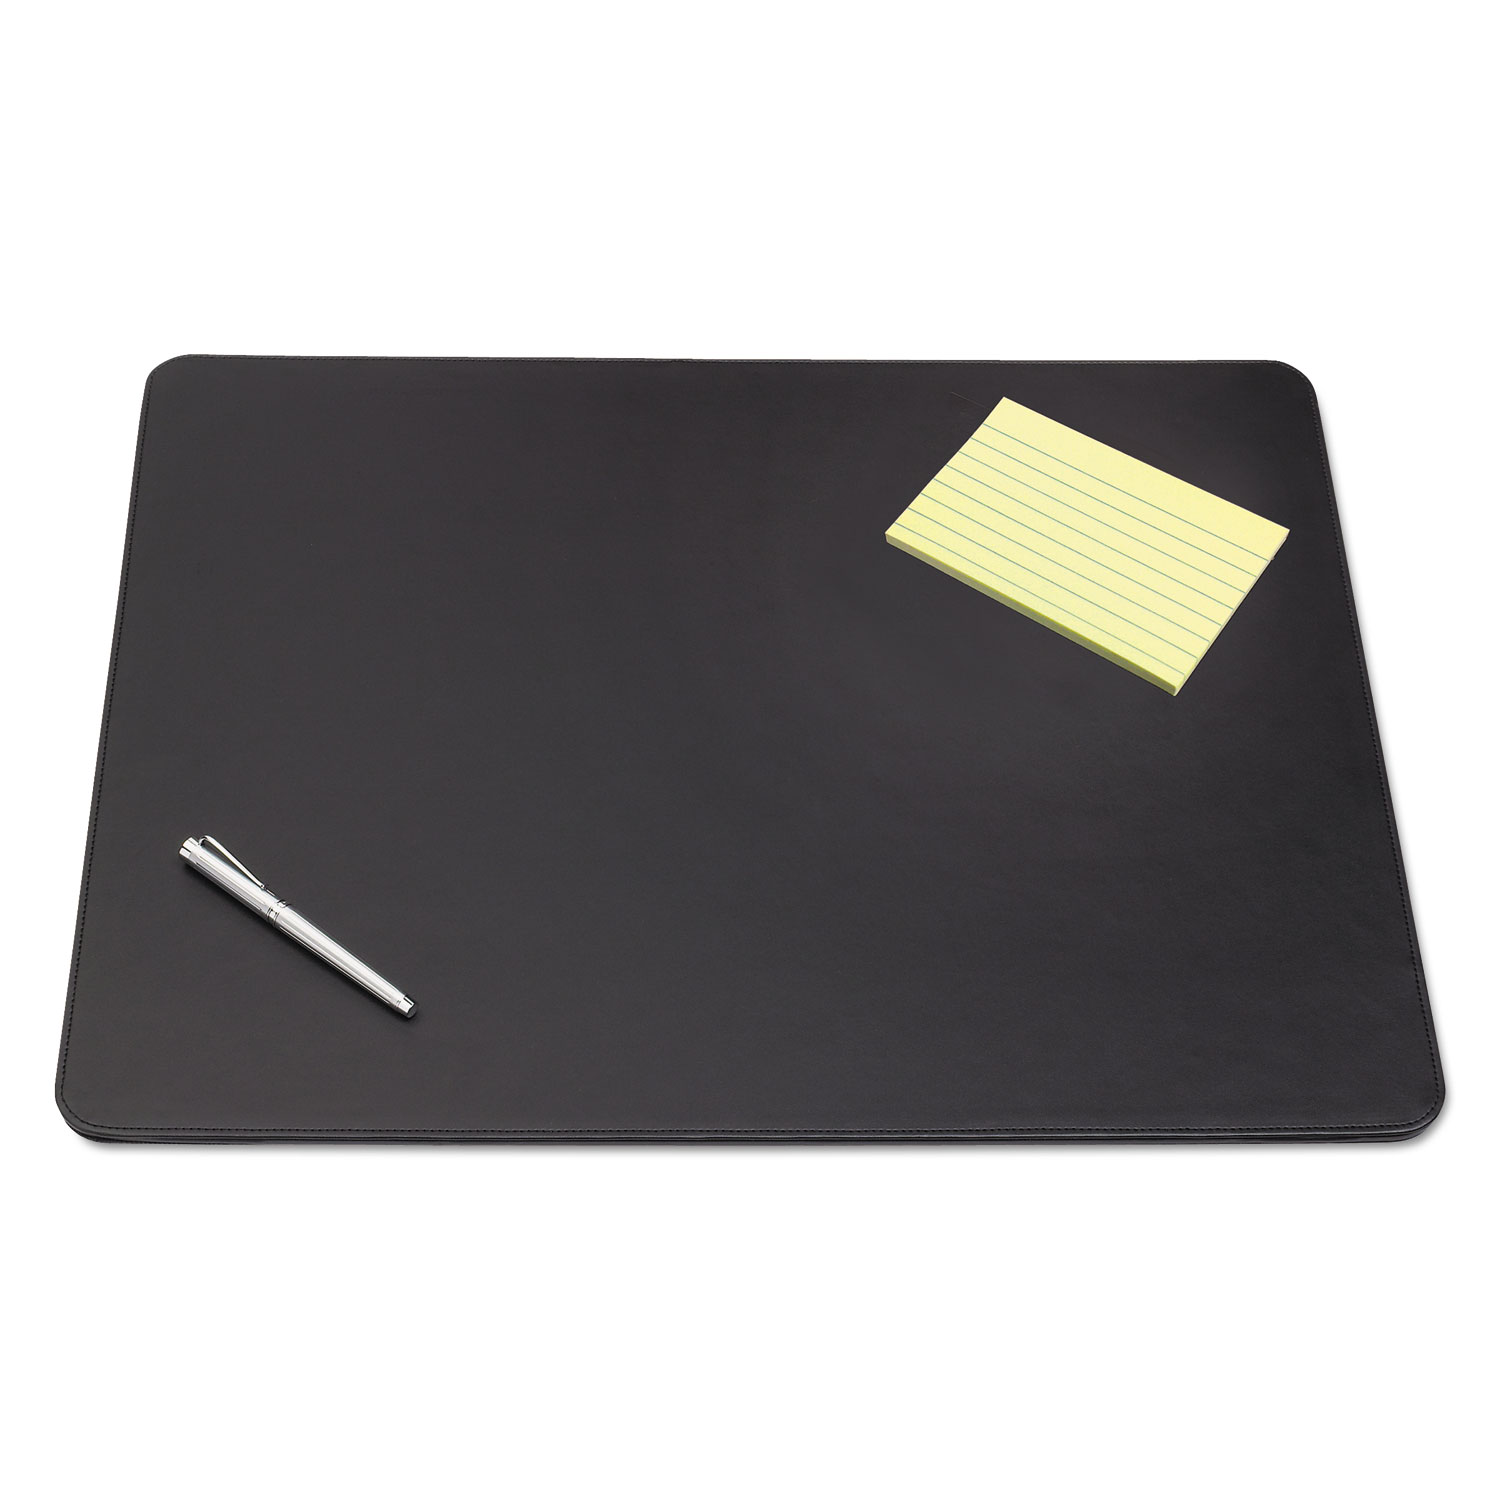  Artistic 5100-6-1 Sagamore Desk Pad w/Decorative Stitching, 36 x 20, Black (AOP510061) 